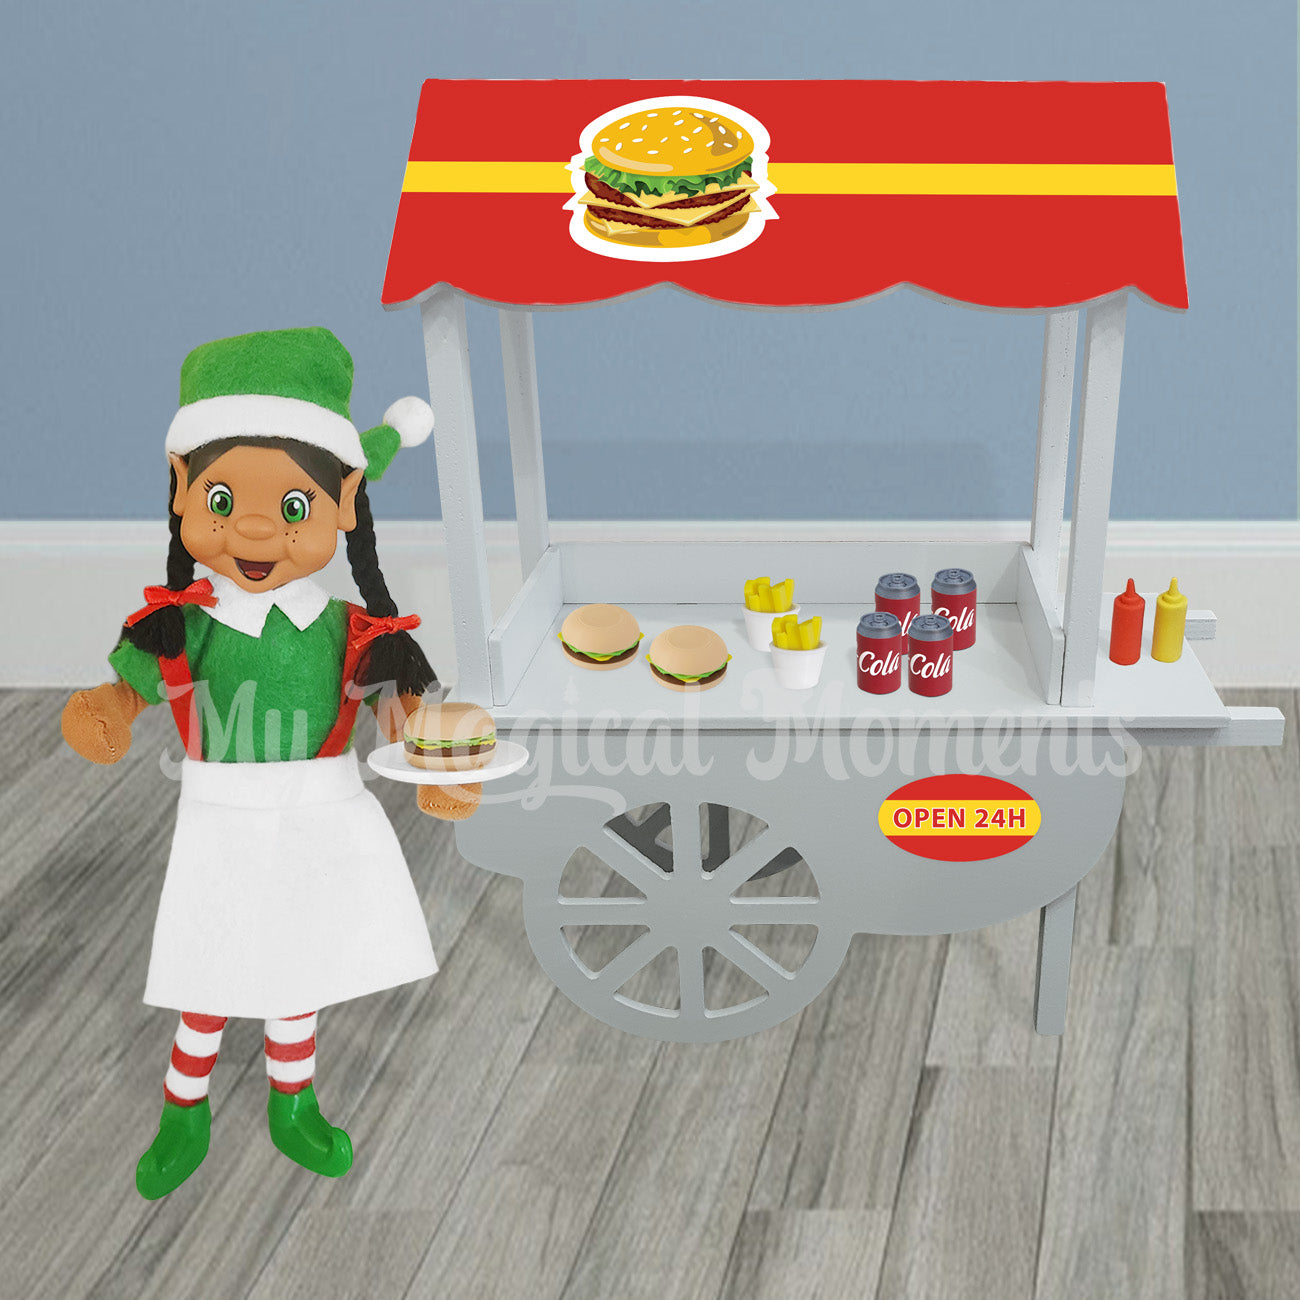 Vendor Cart Shop - Fast Food Stand